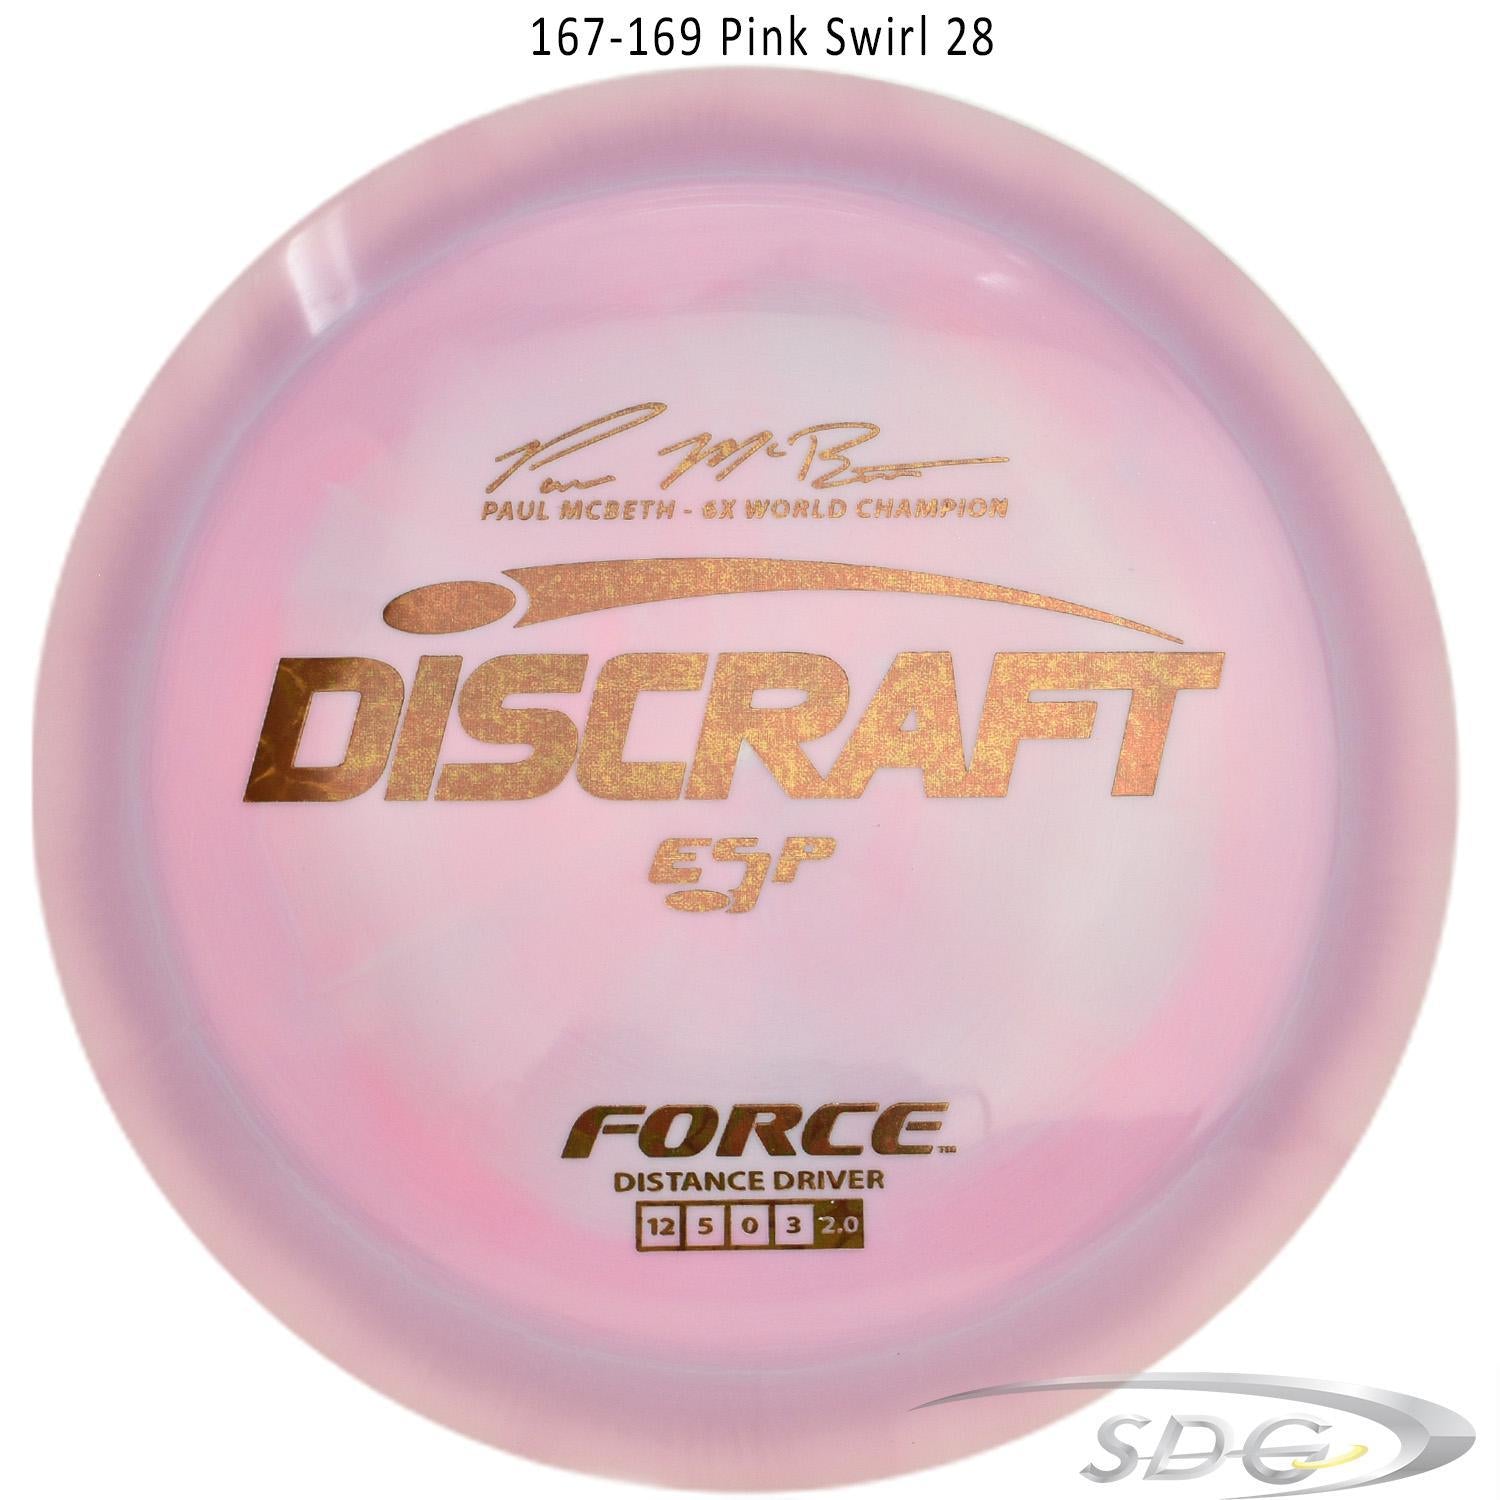 discraft-esp-force-6x-paul-mcbeth-signature-disc-golf-distance-driver-169-160-weights 167-169 Pink Swirl 28 